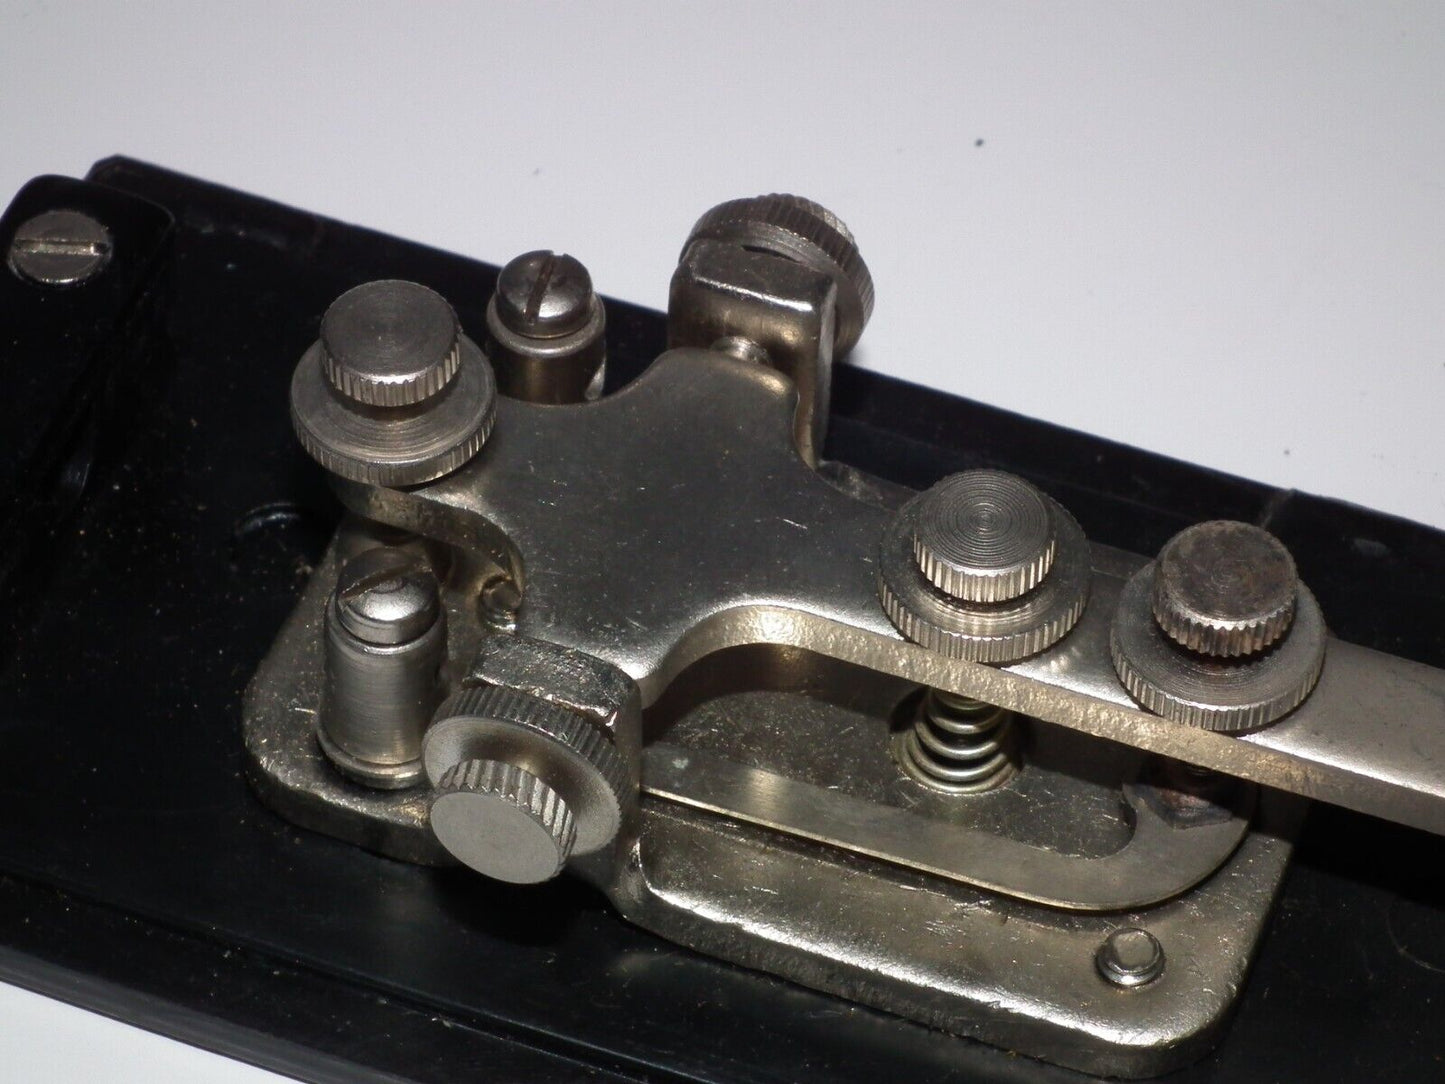 Hi Quality Military Morse Code Keyer - NOS - Telegraph Key